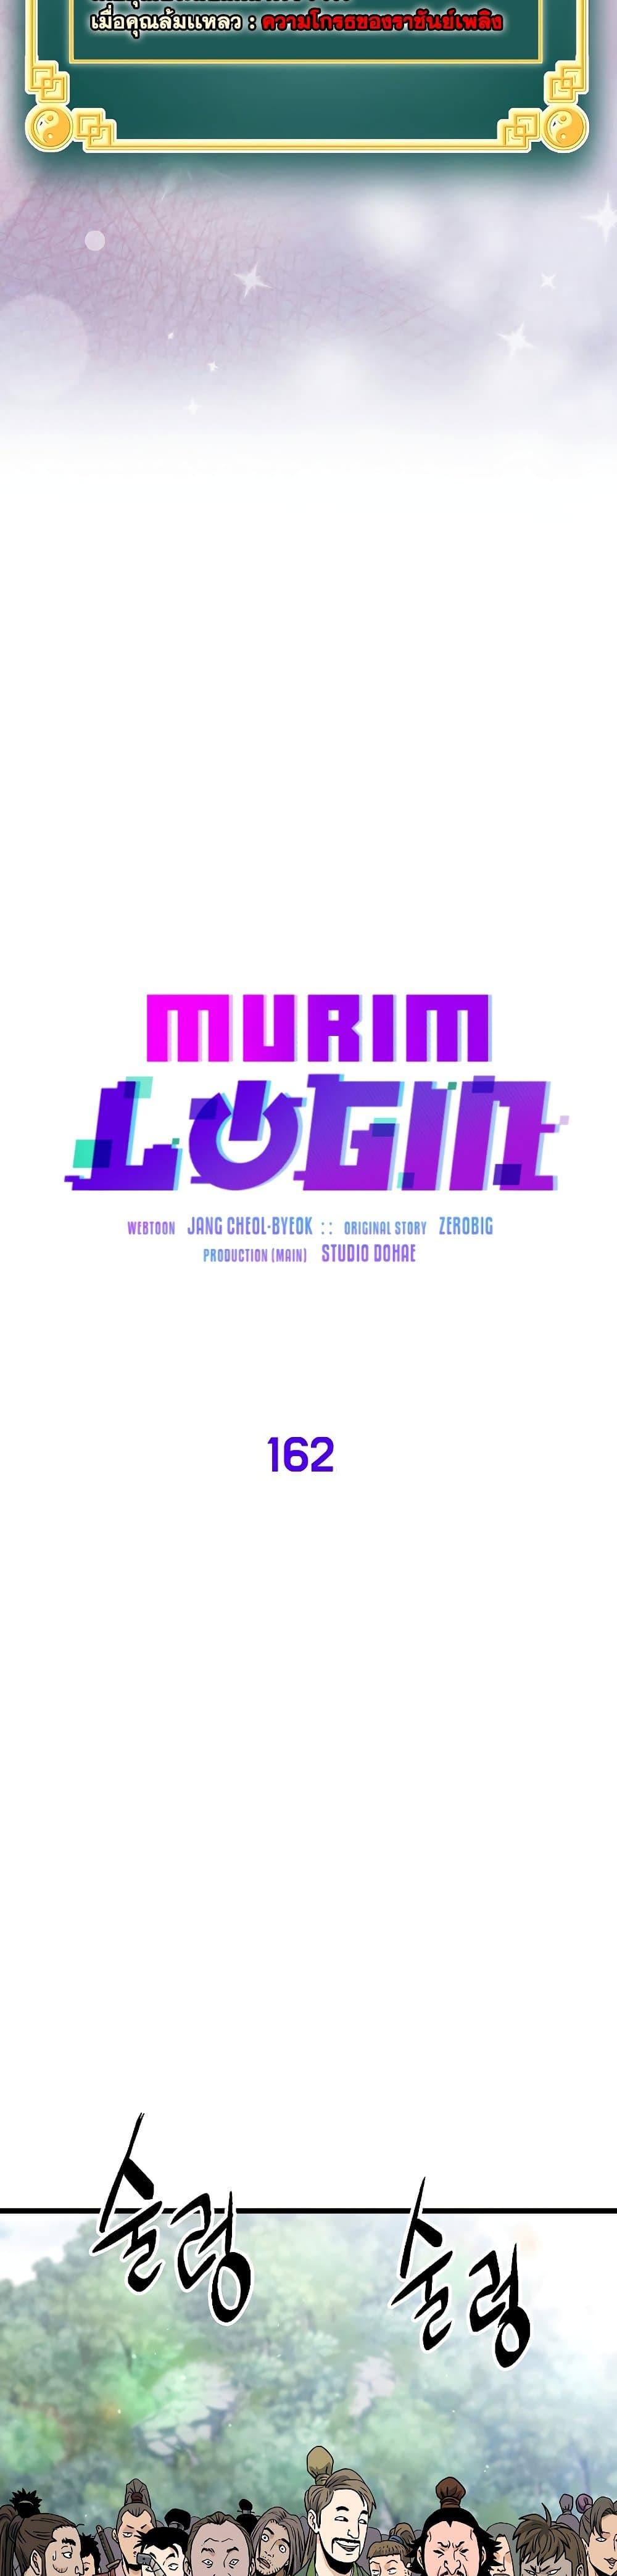 Murim Login 162 08